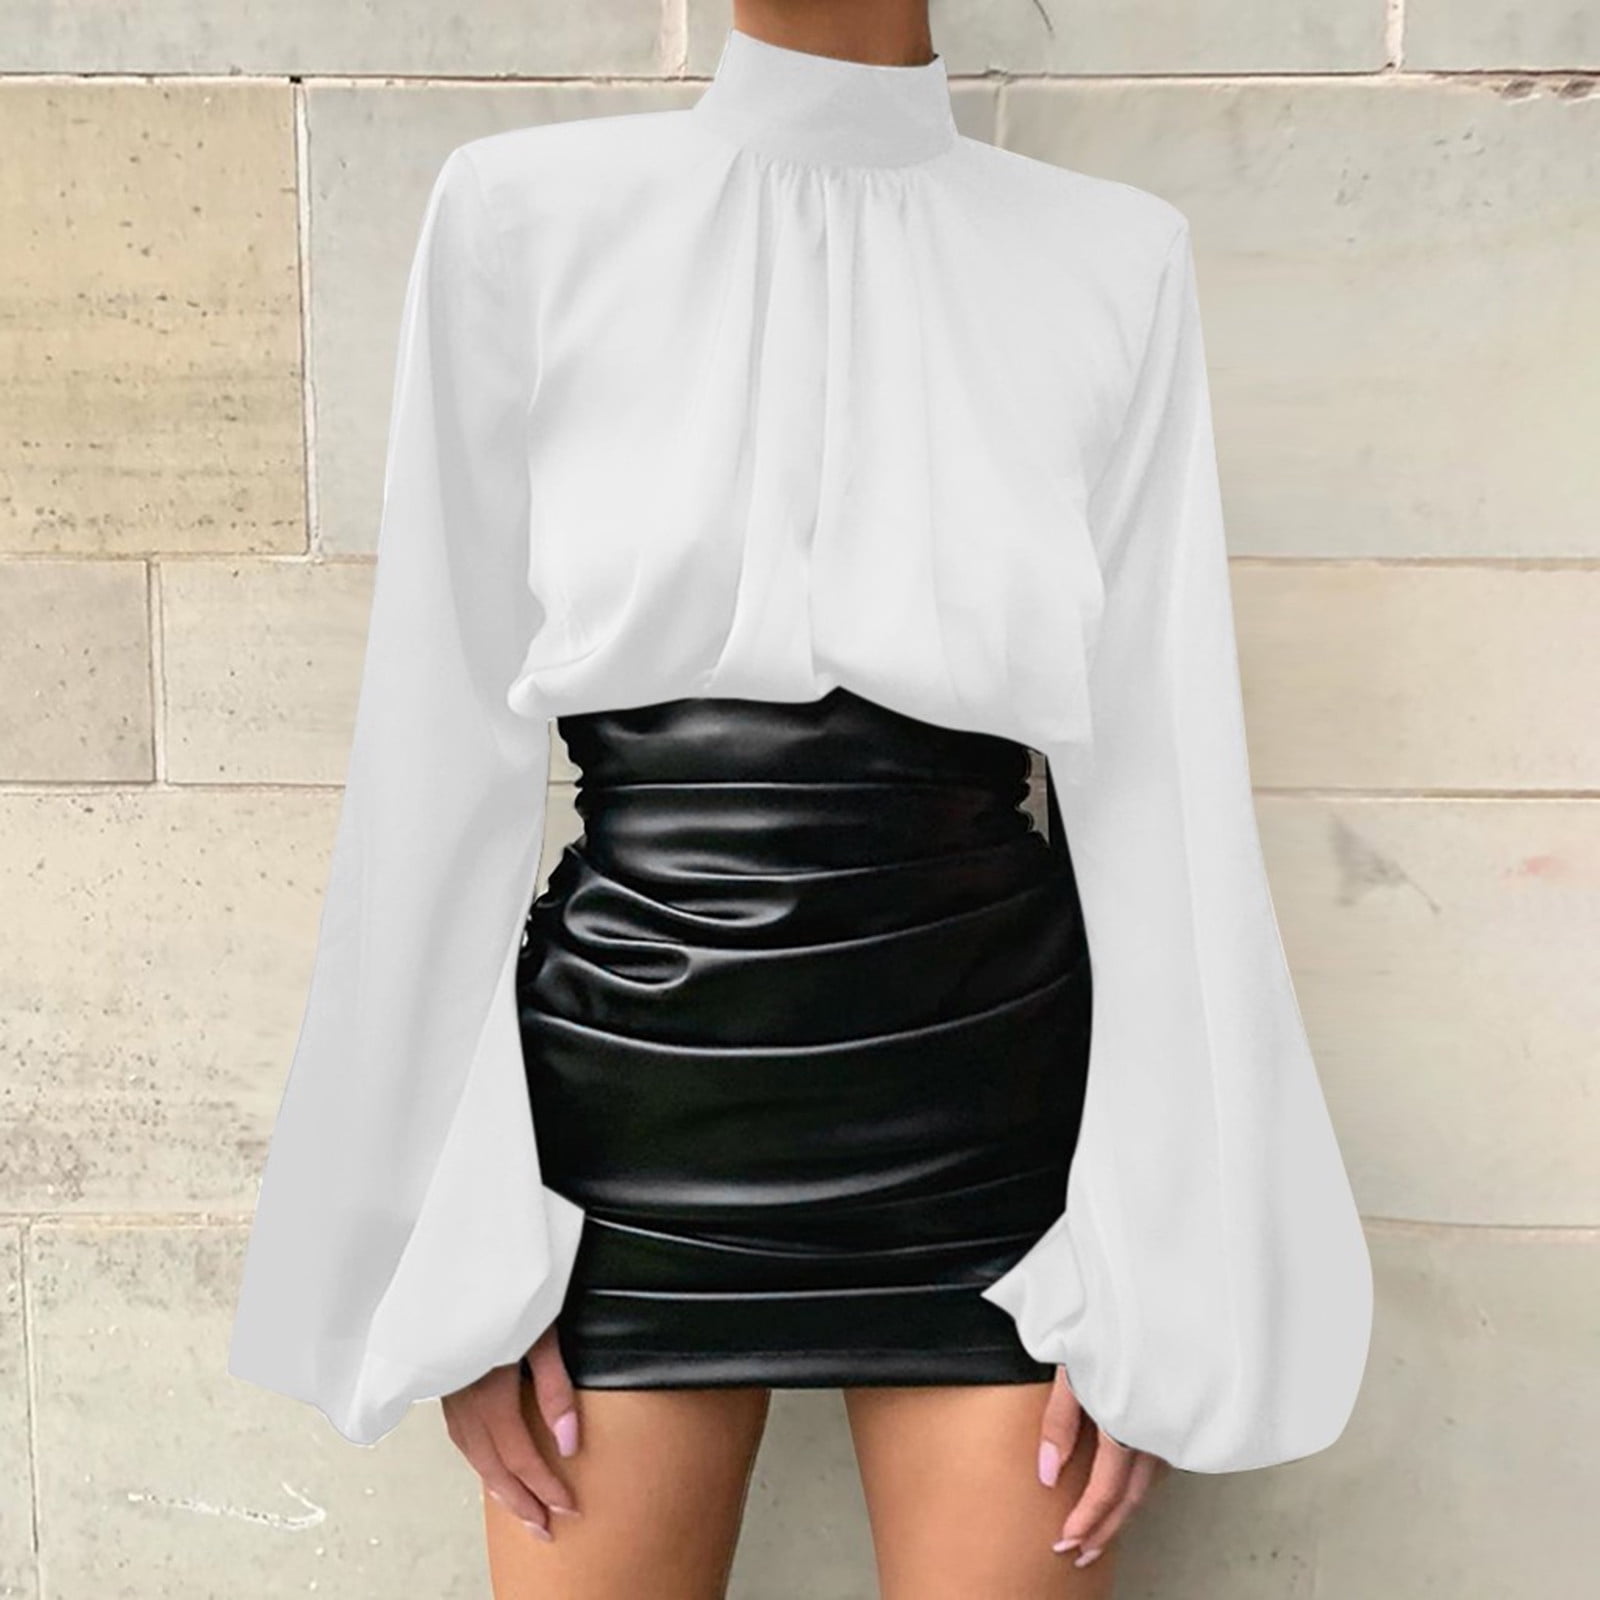 LARACE Women's Tops Long Sleeve Dressy Casual Plus Size Tunic Tops